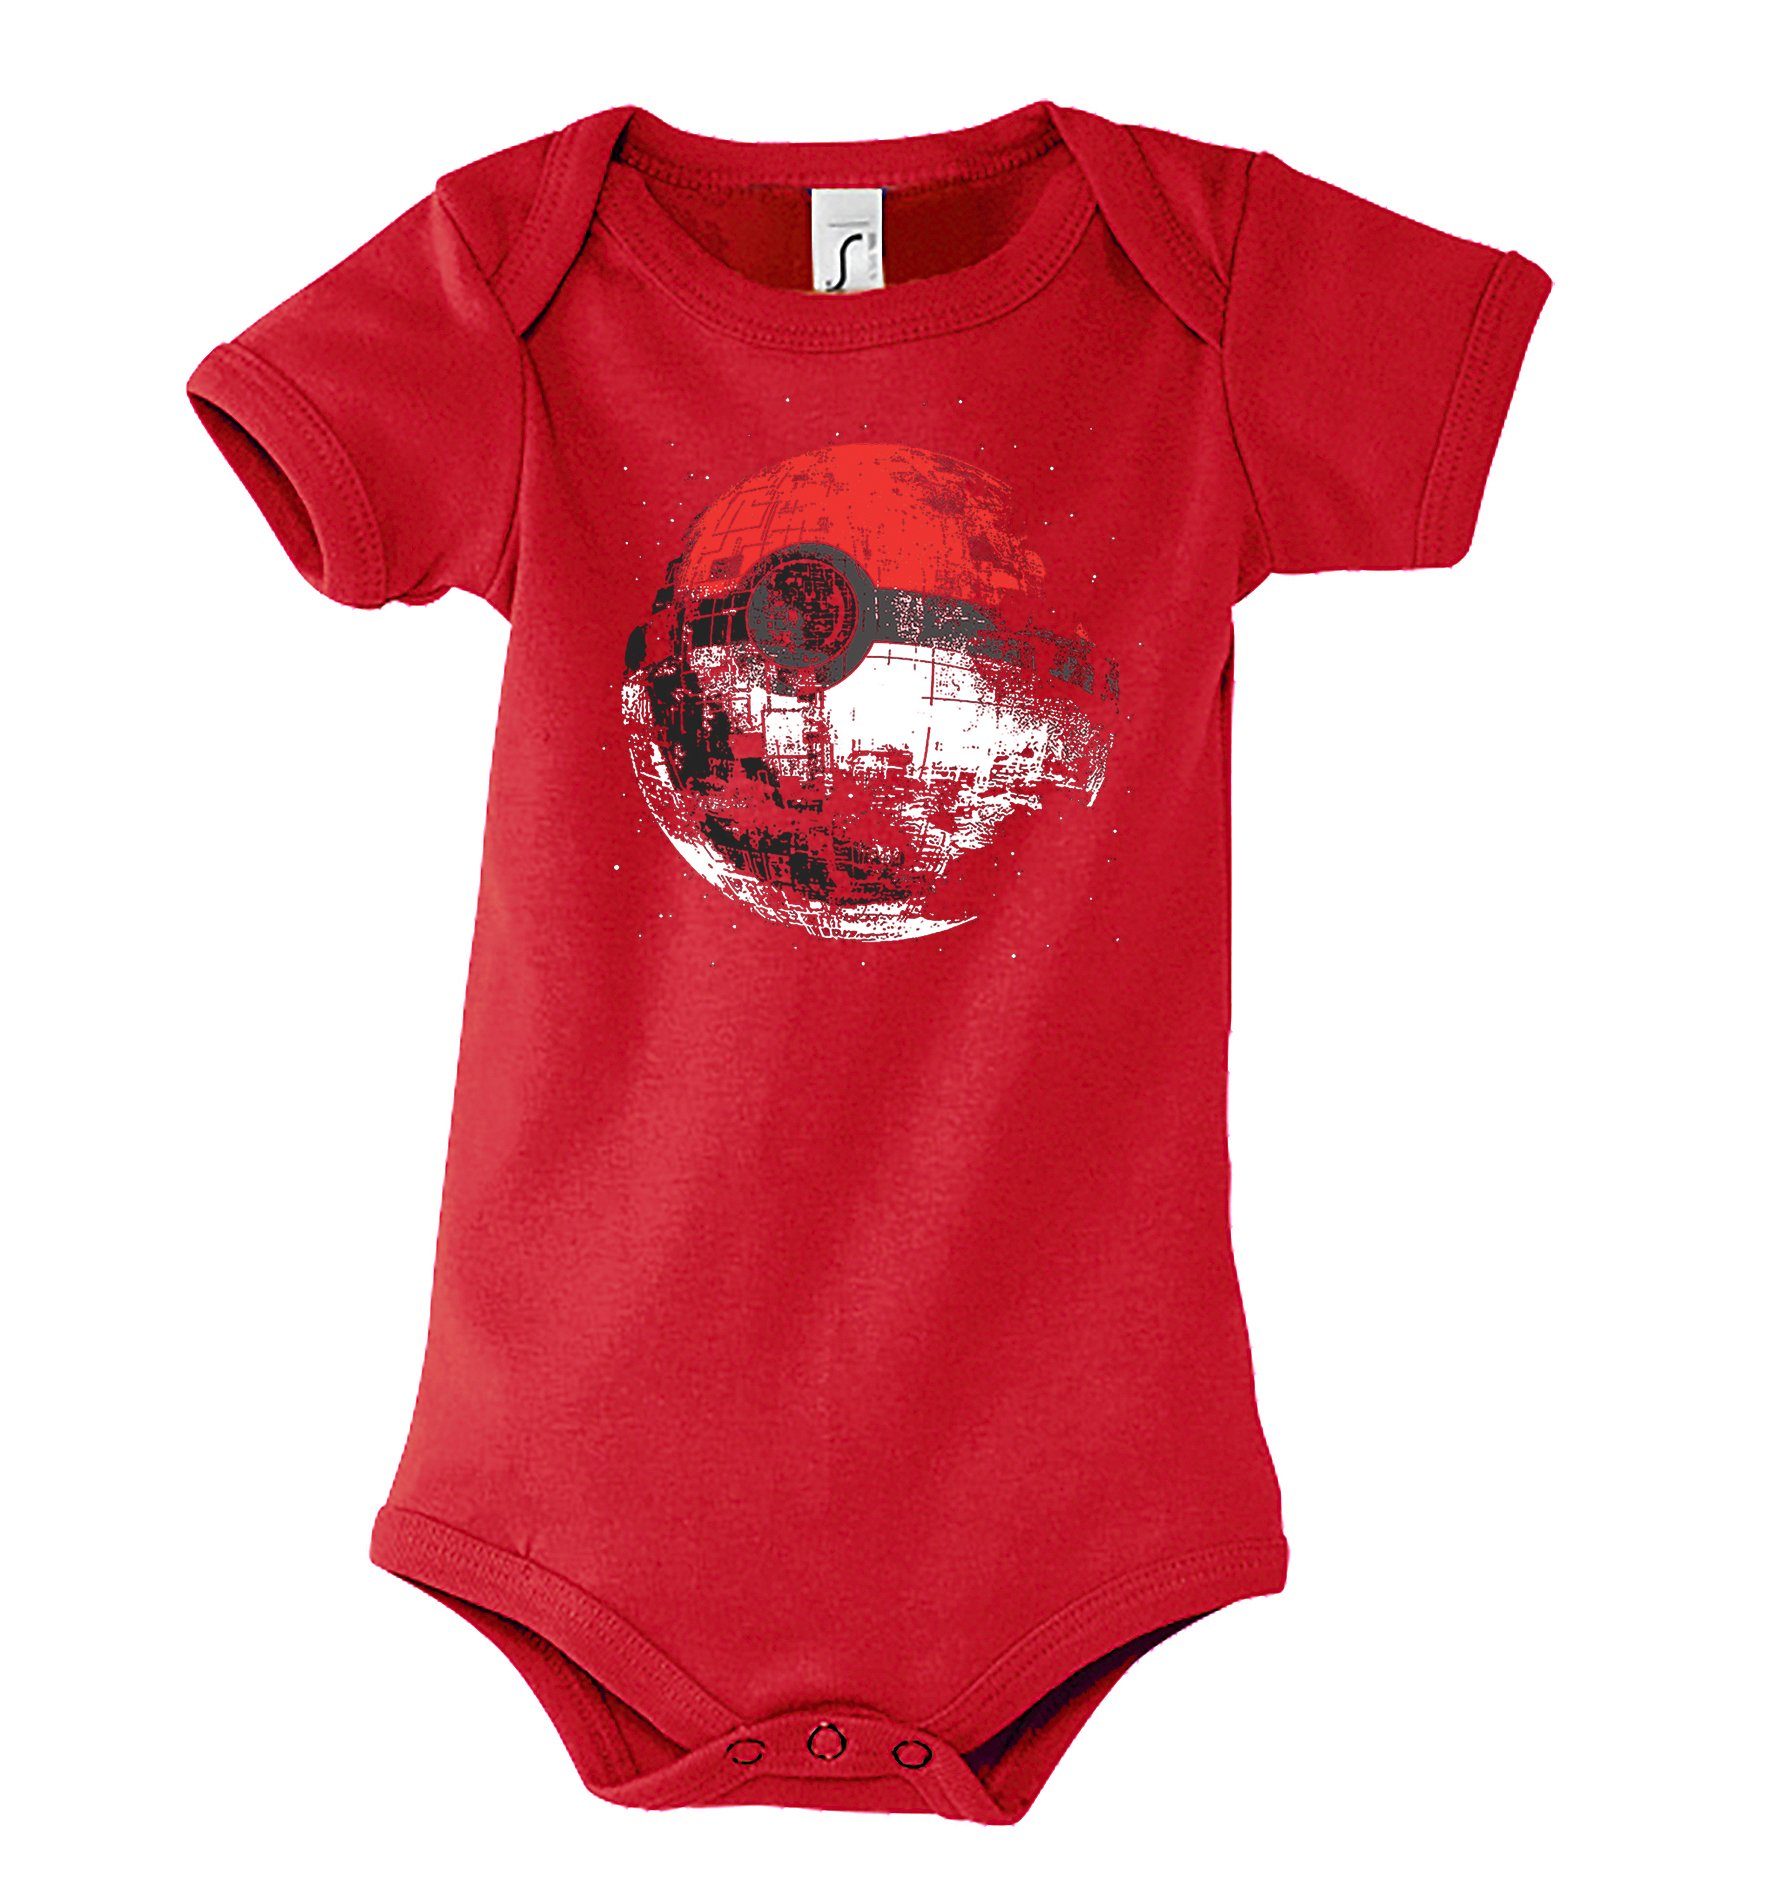 tollem Kurzarmbody Baby Poke Design, Stern Designz mit Youth Ball Rot in Strampler Body Frontdruck